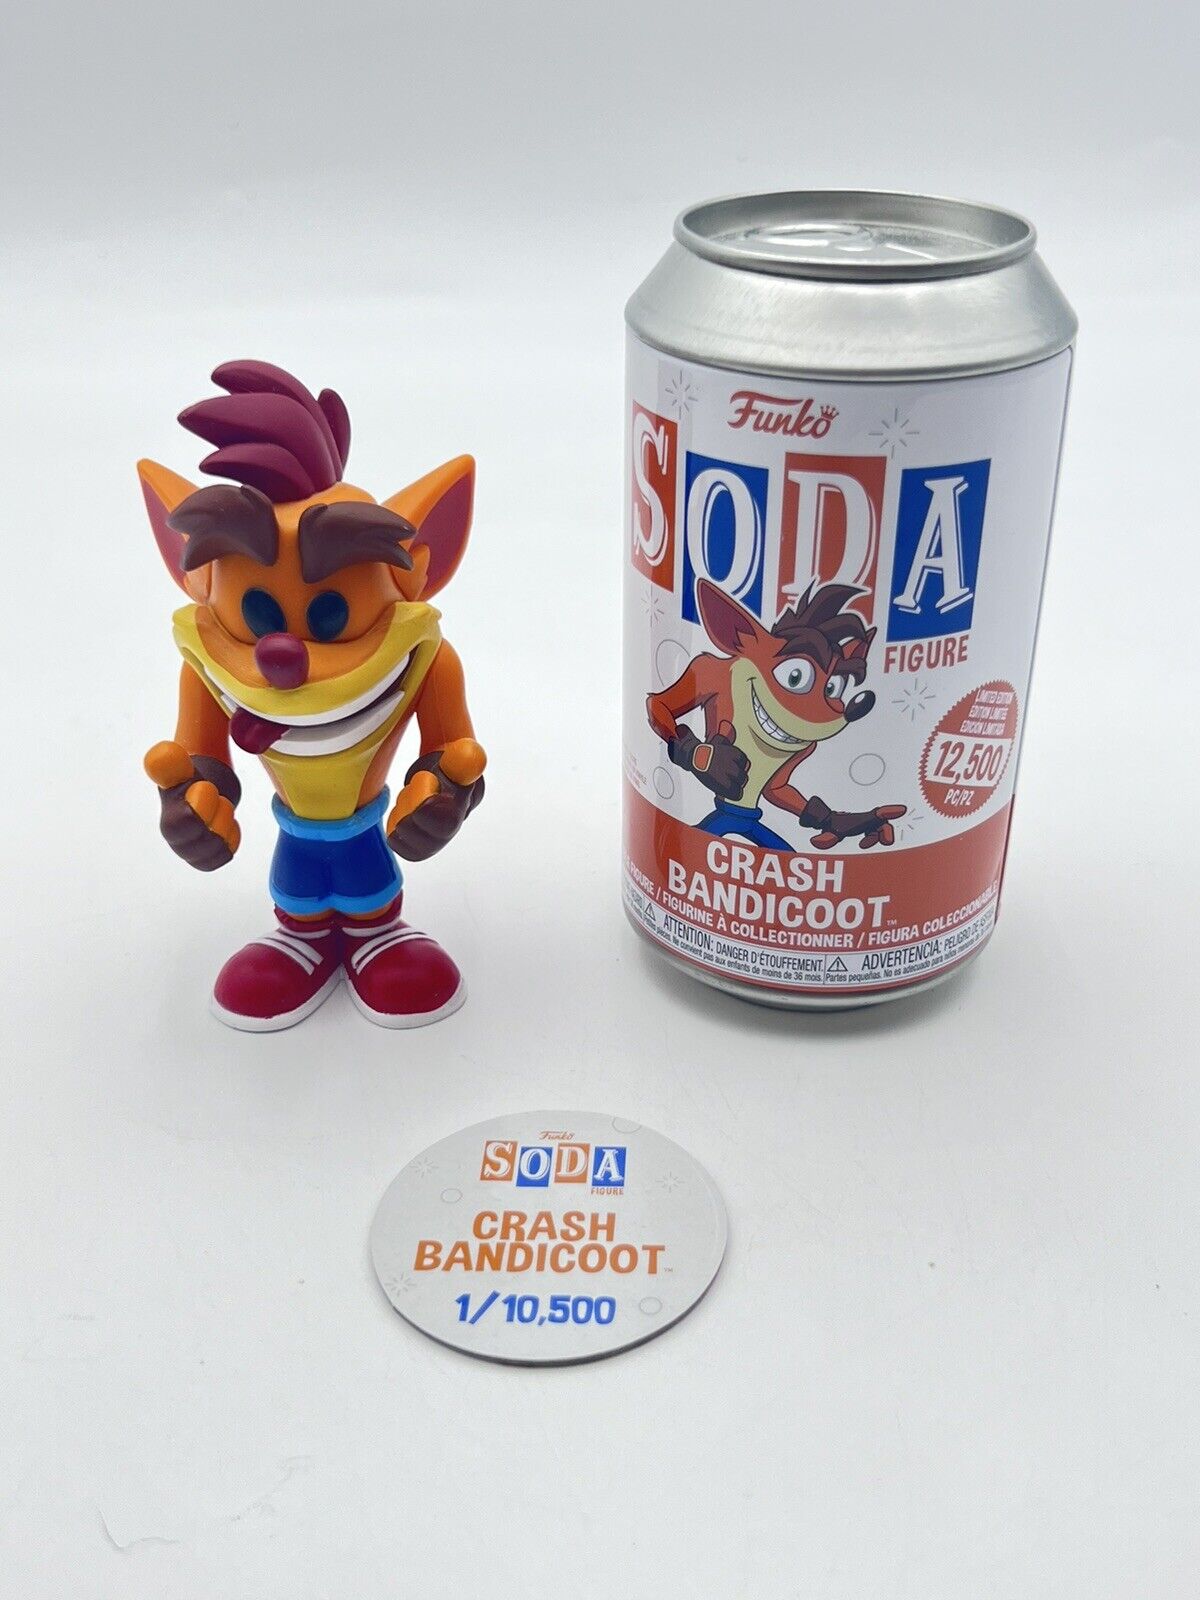 Funko Vinyl Soda: Crash Bandicoot - Crash Bandicoot 1/10,500